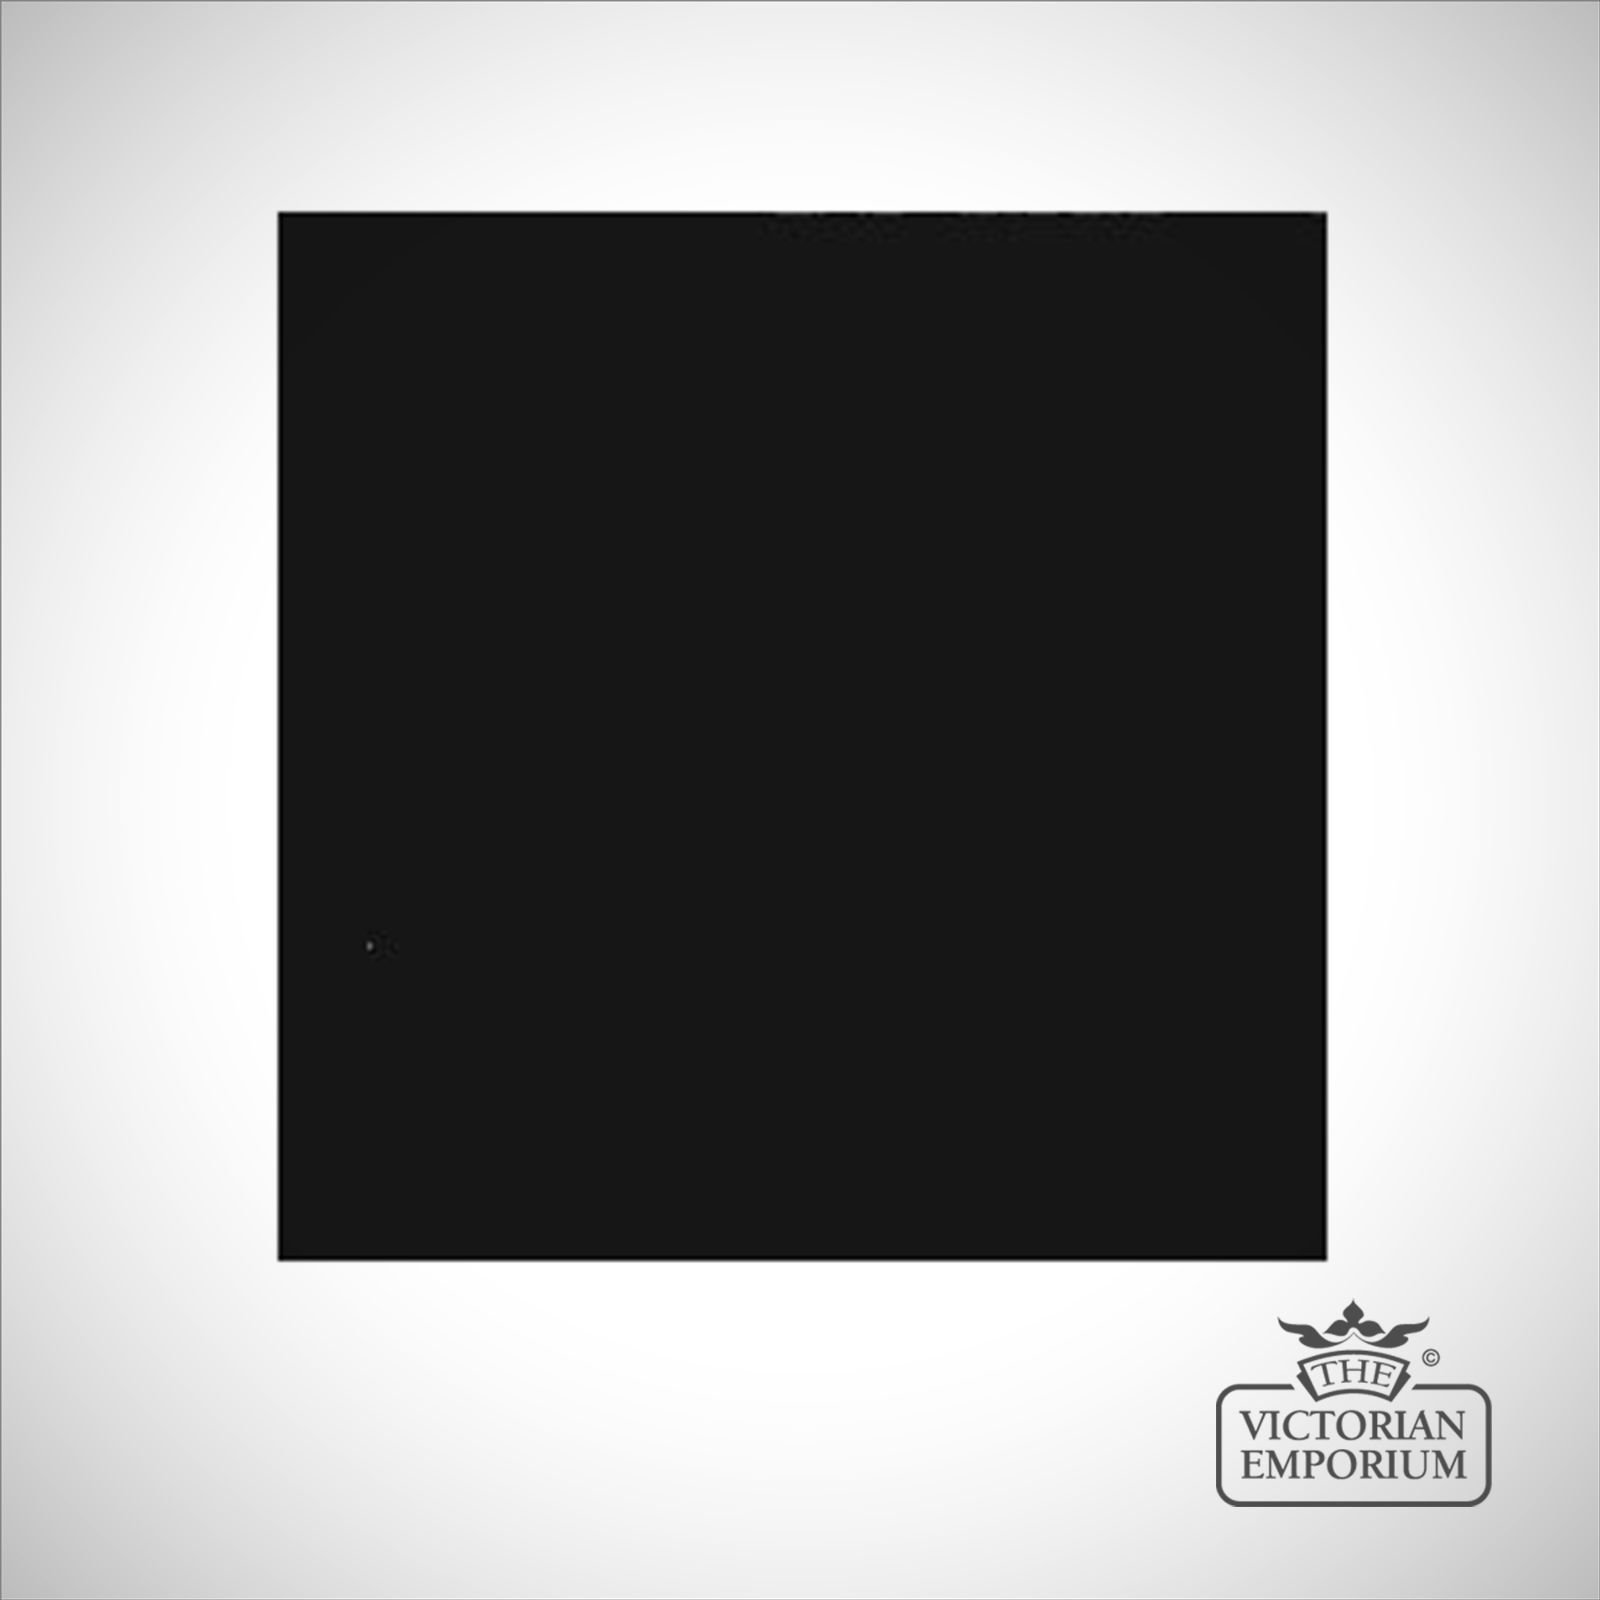 Basic Black Floor Tile - interior or exterior use